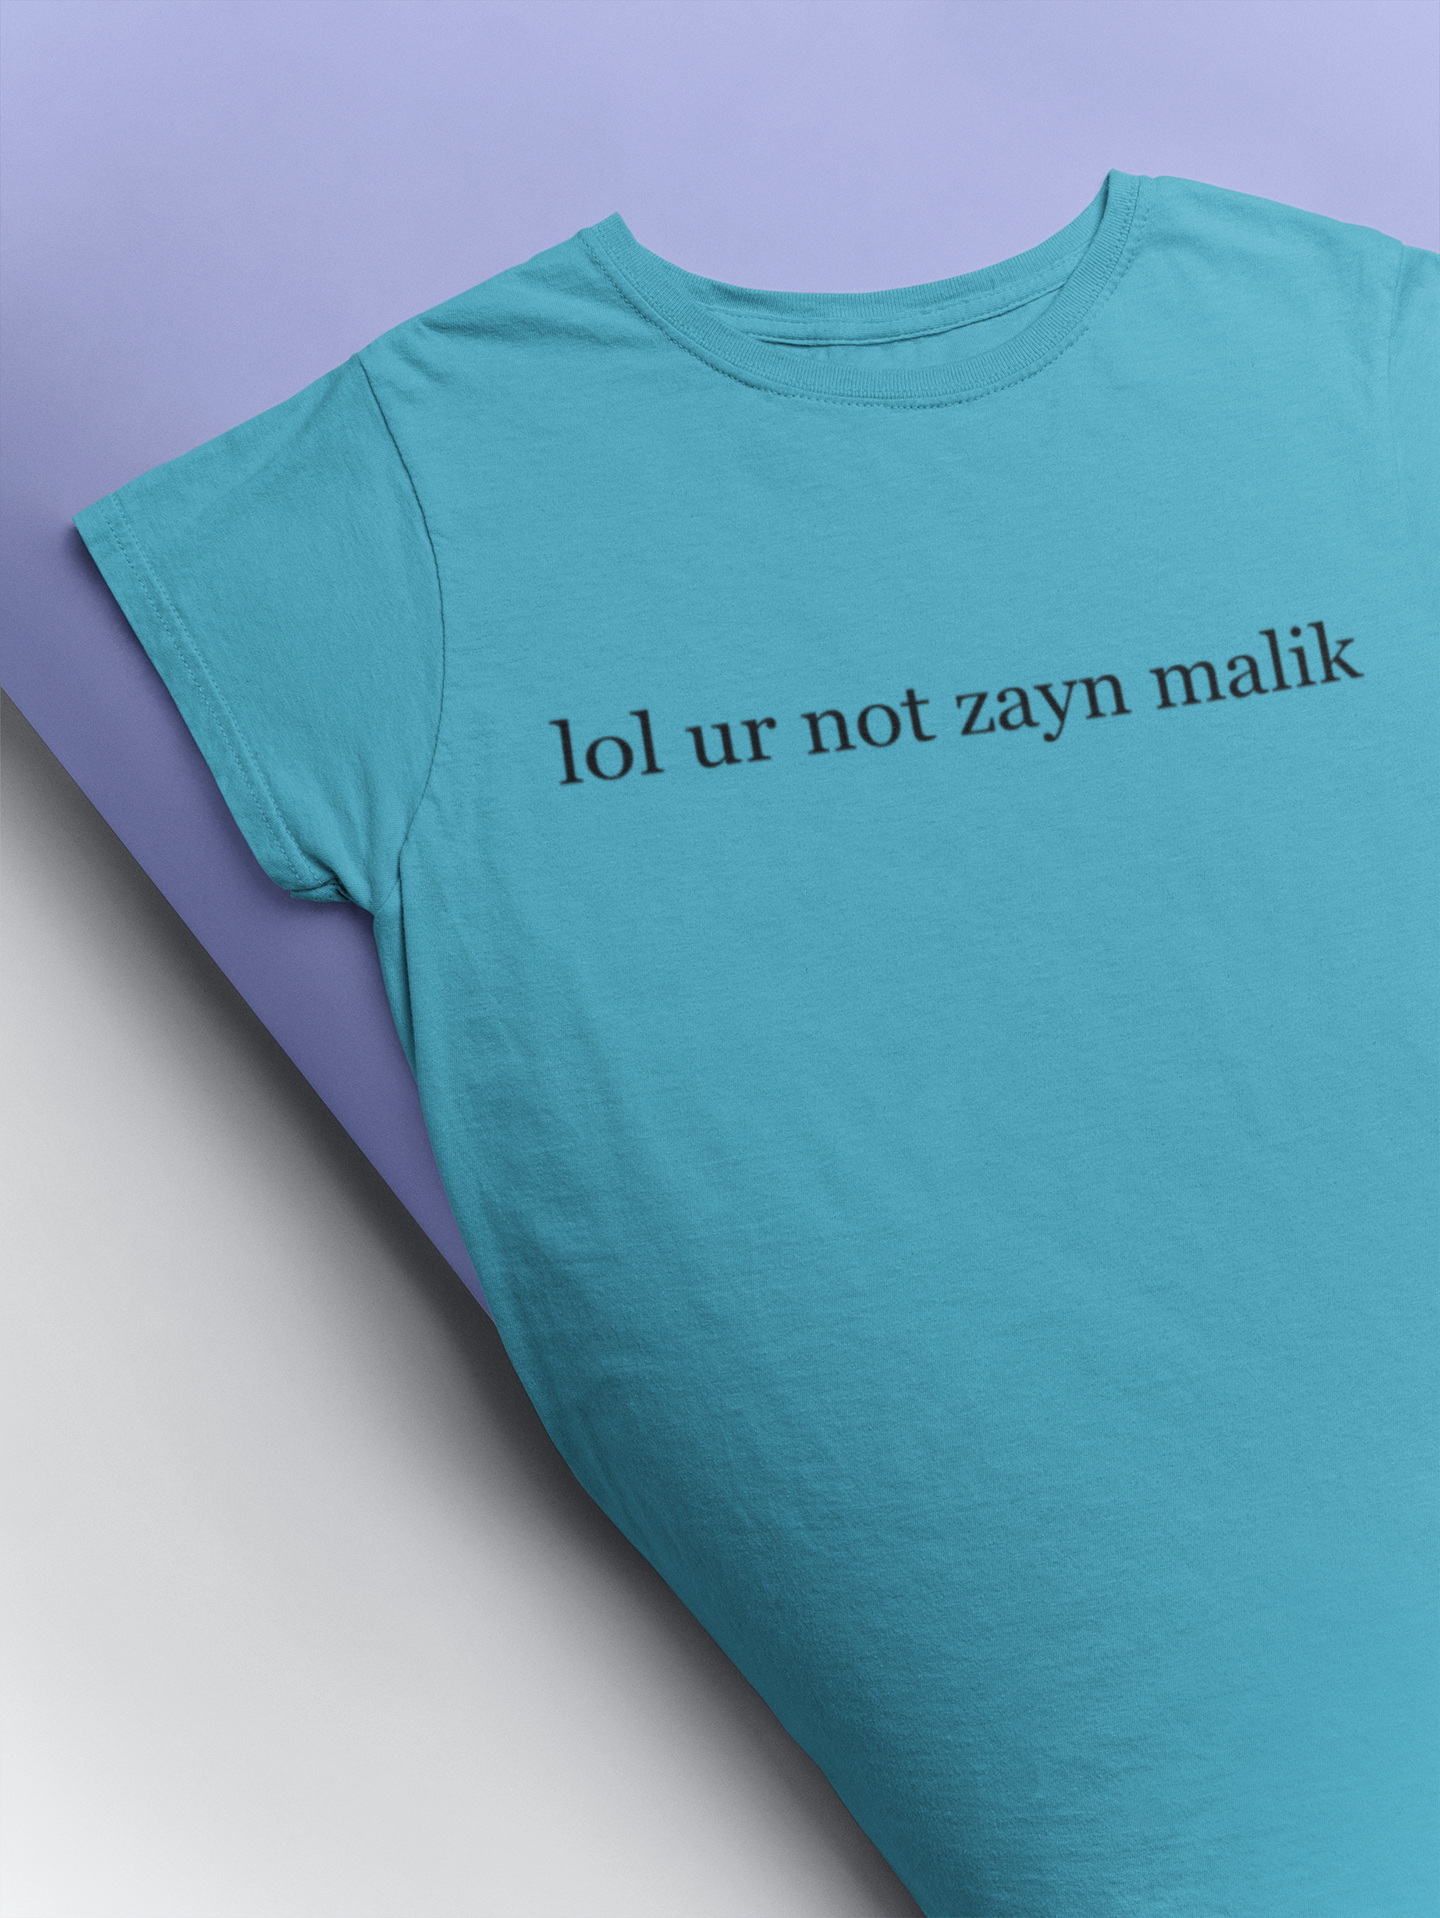 Lol You Are Not Zyan Malik Giga Hadid Celebrity T-shirt- FunkyTeesClub